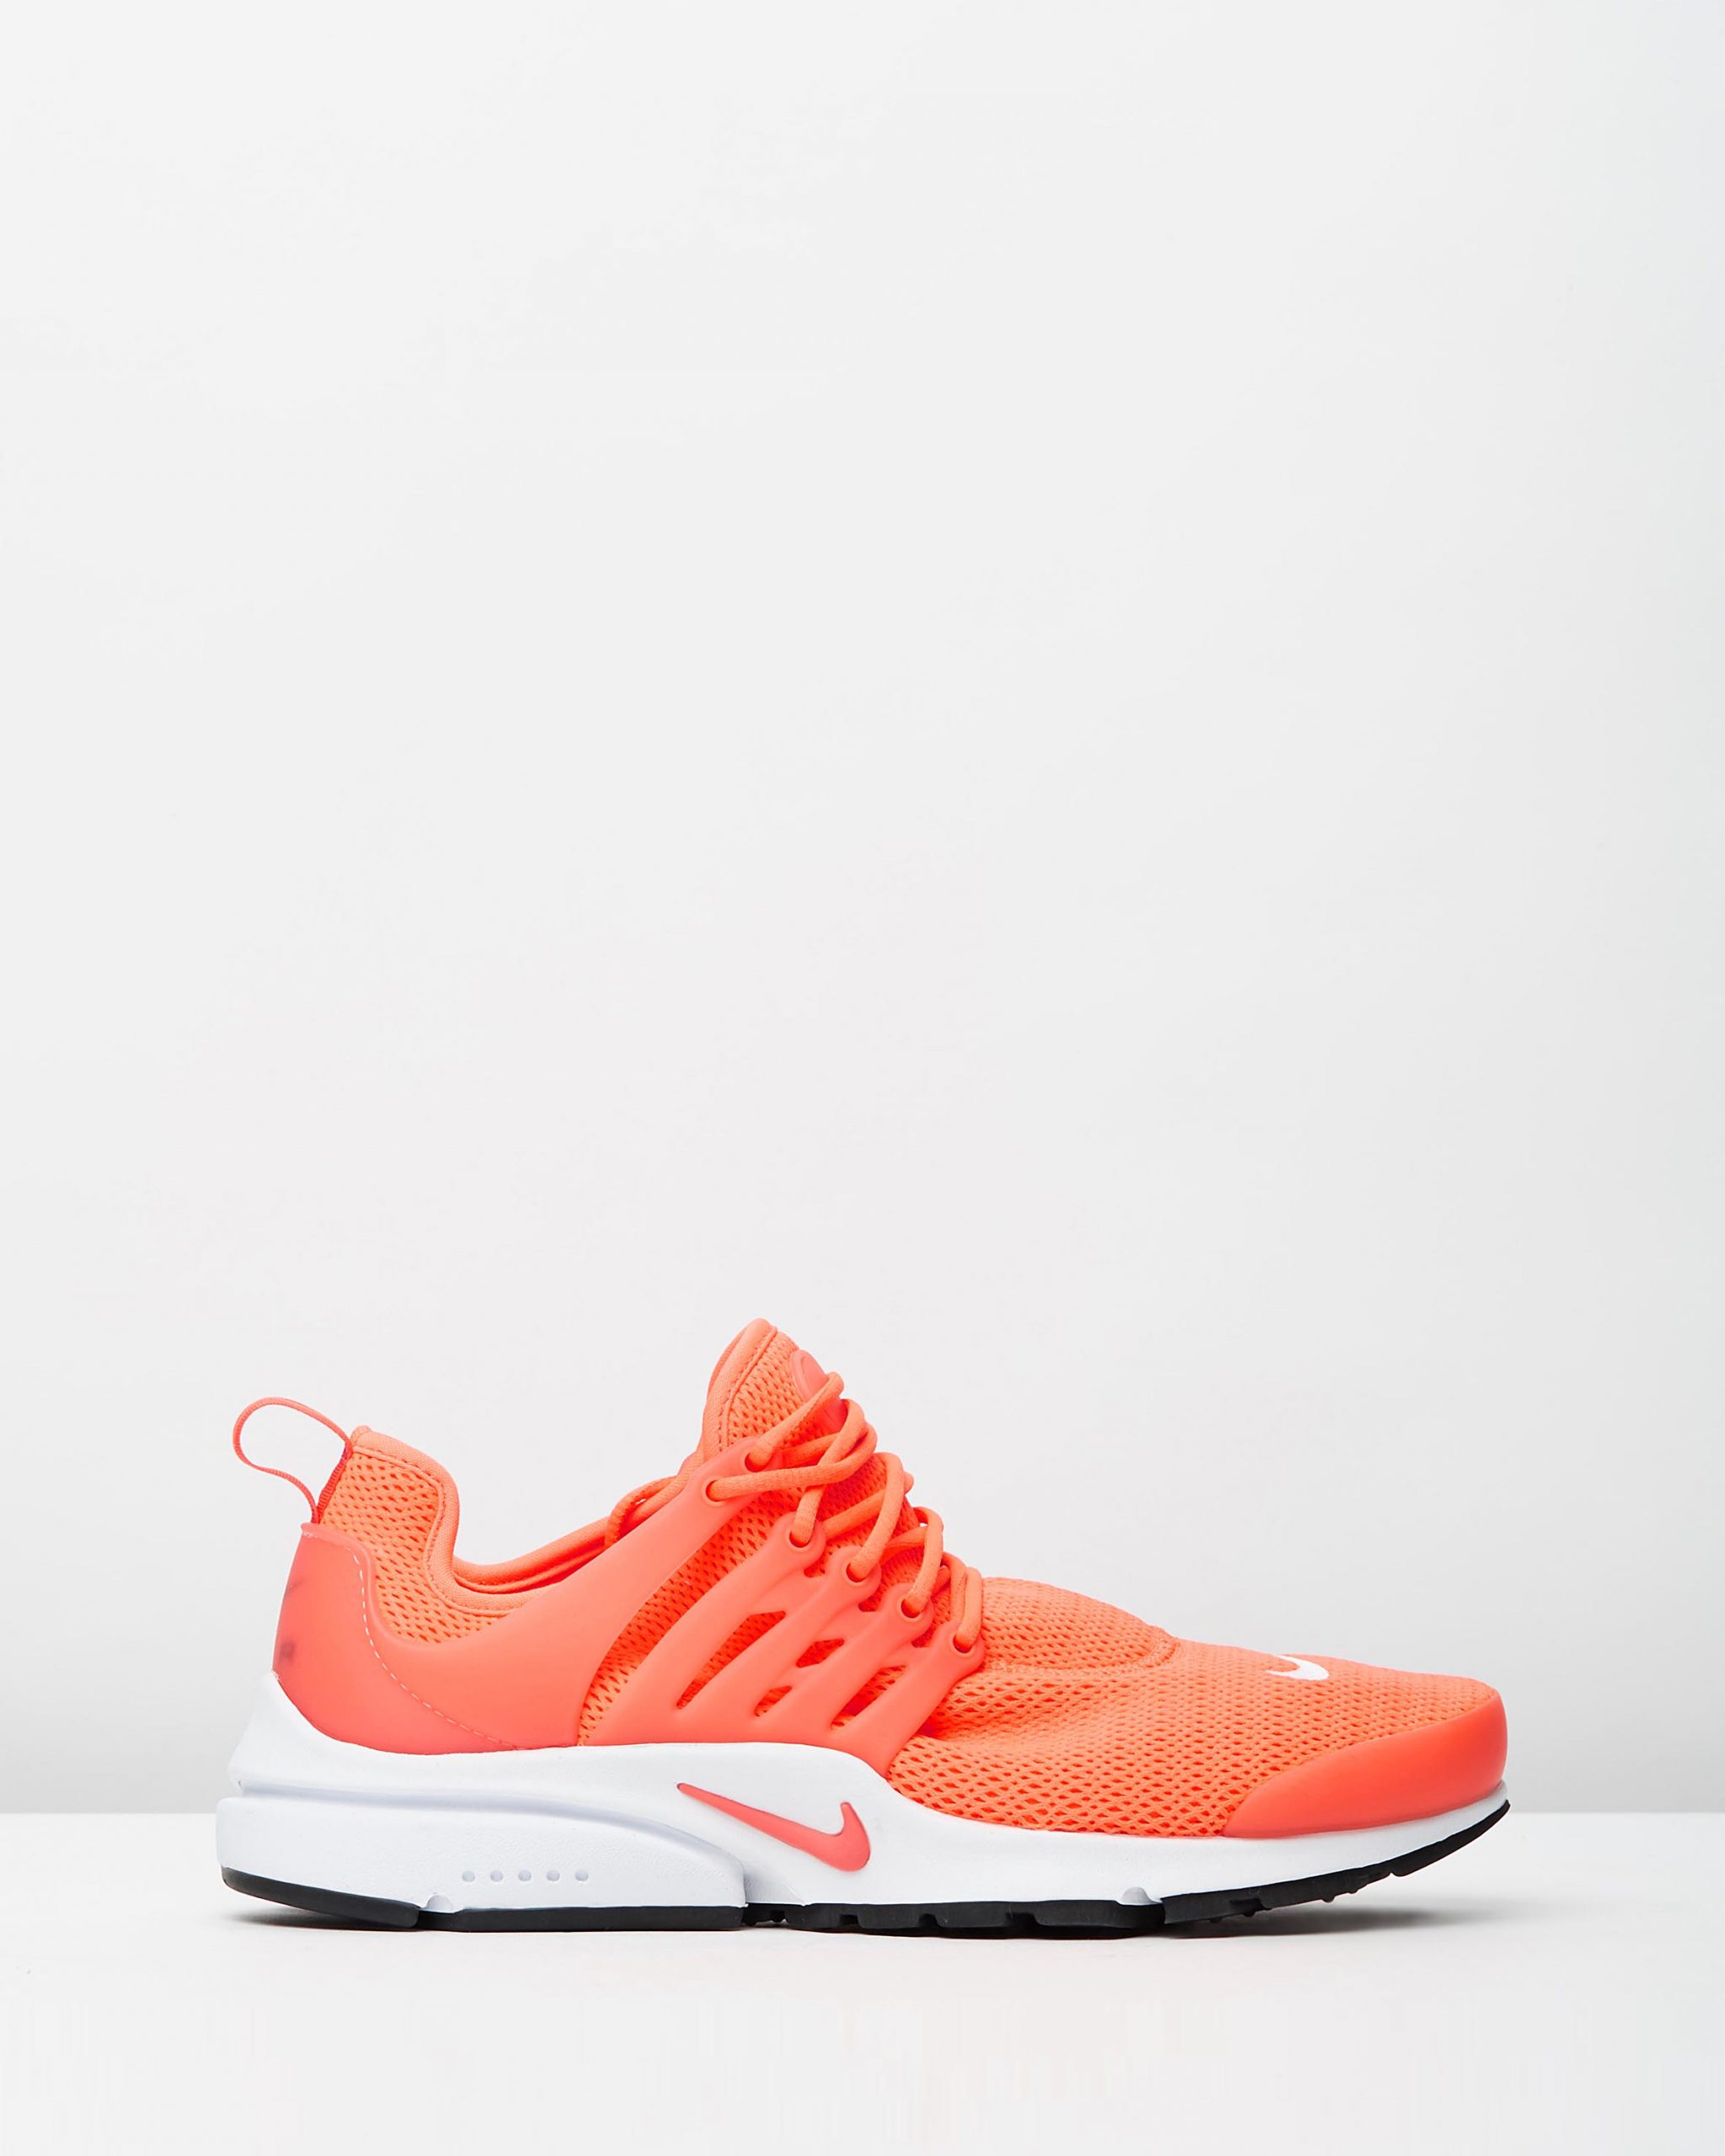 Nike Women's Air Presto Neon Orange